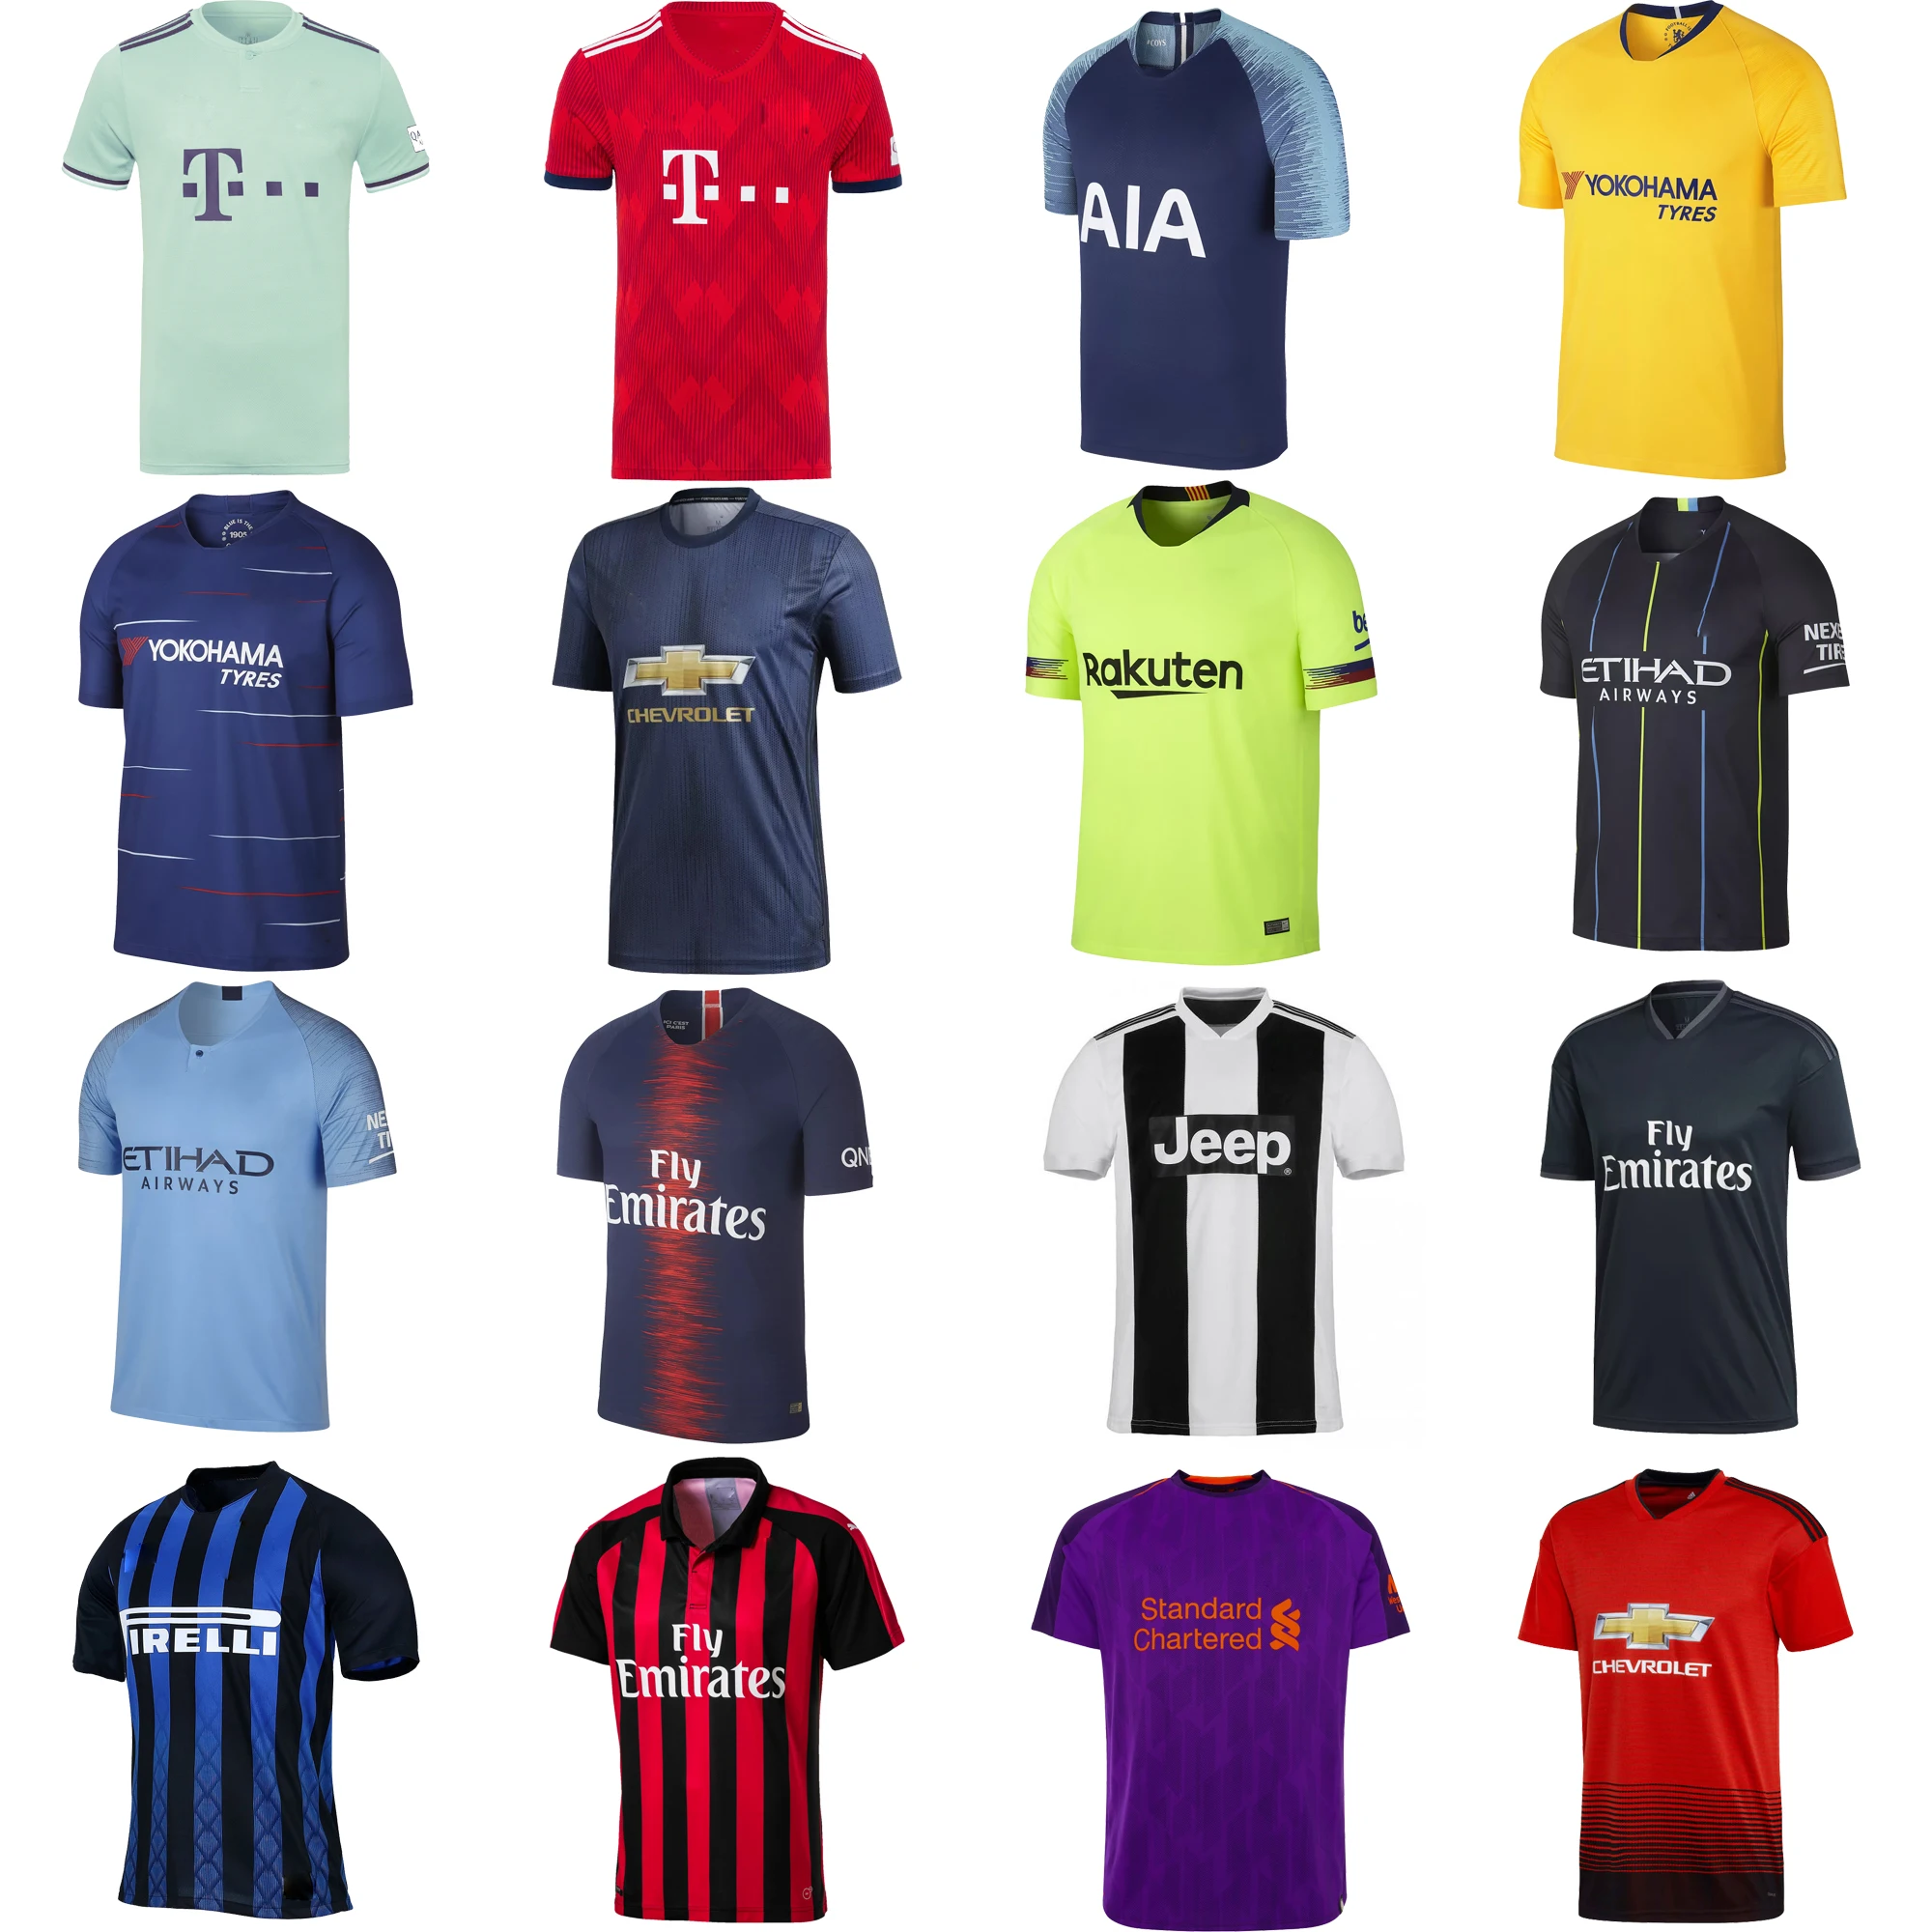 

wholesale madrid city united juventus tottenham everton inter neymar ronaldo soccer football jersey shirts kit